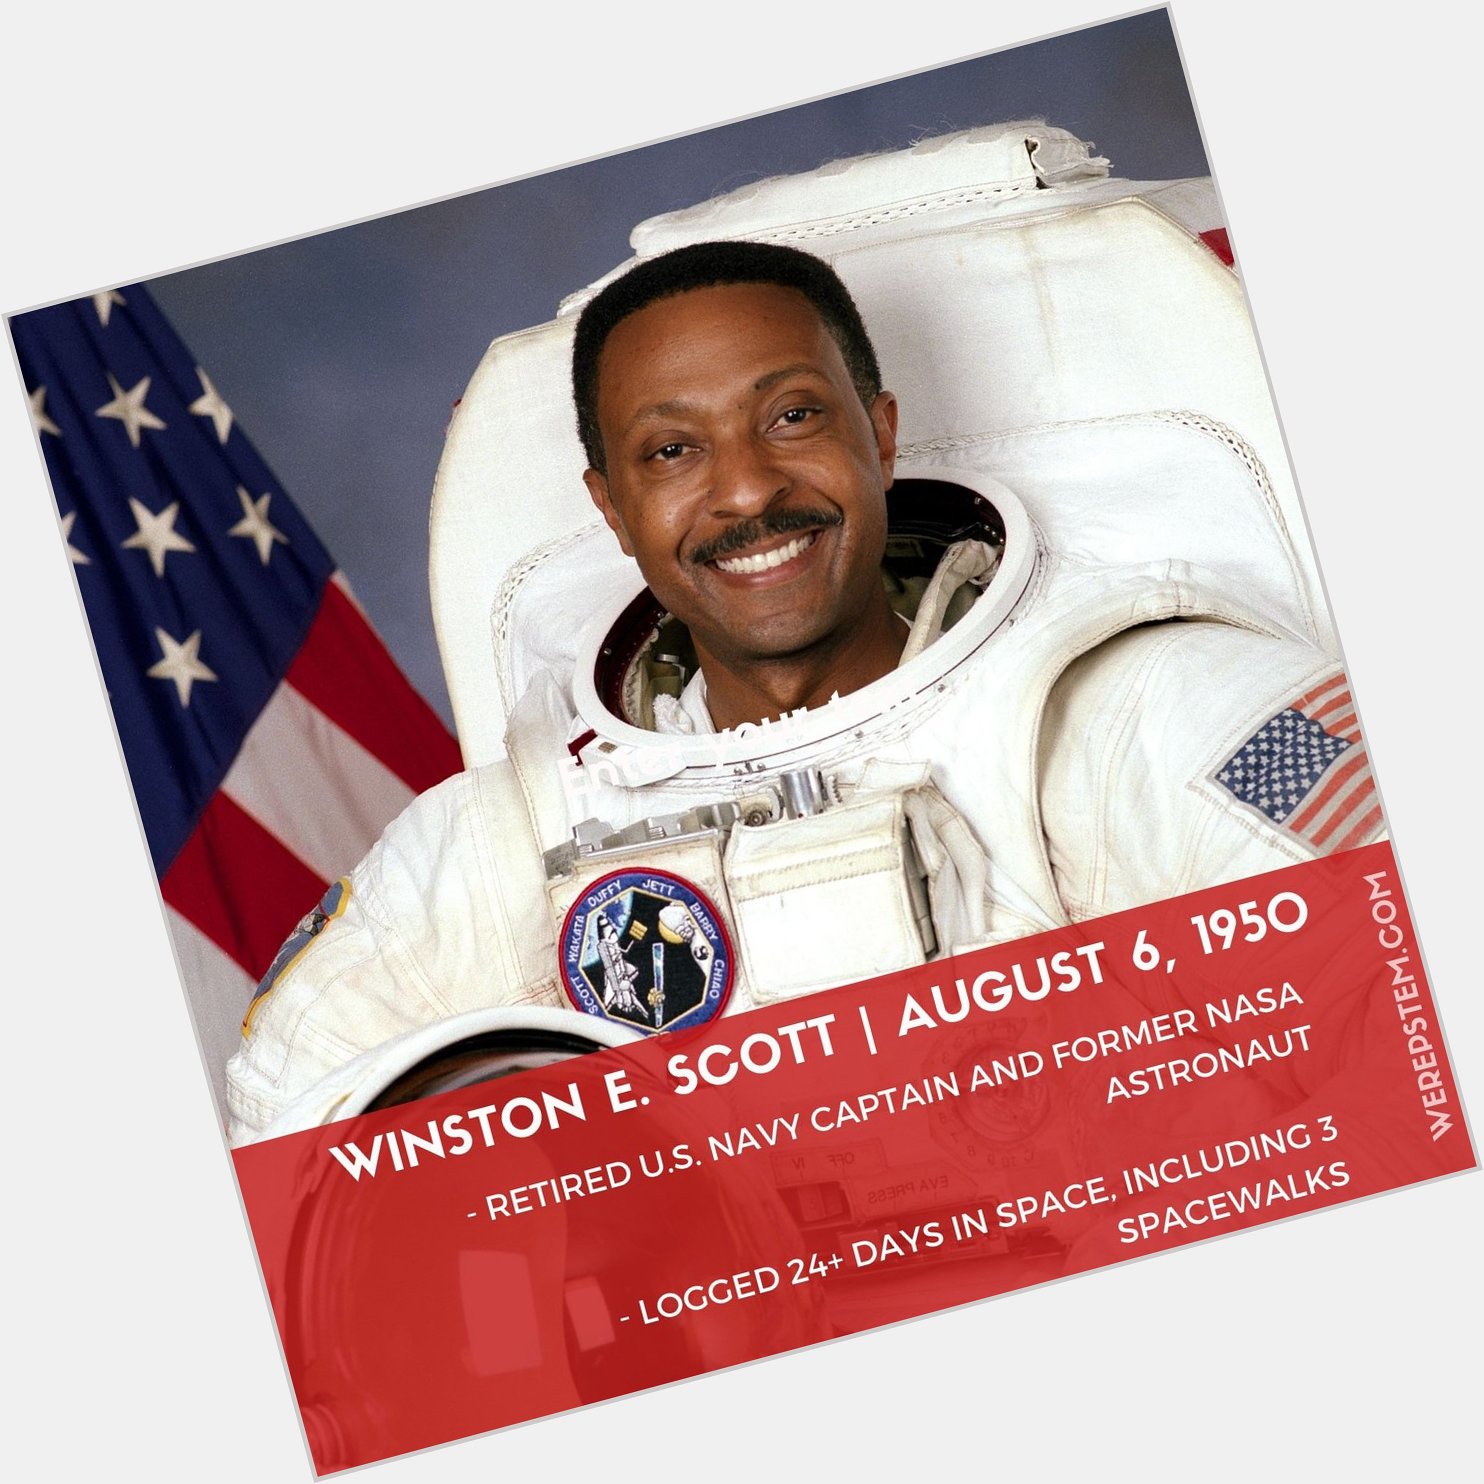 Happy birthday to retired U.S. Navy captain and NASA astronaut Winston Scott! 